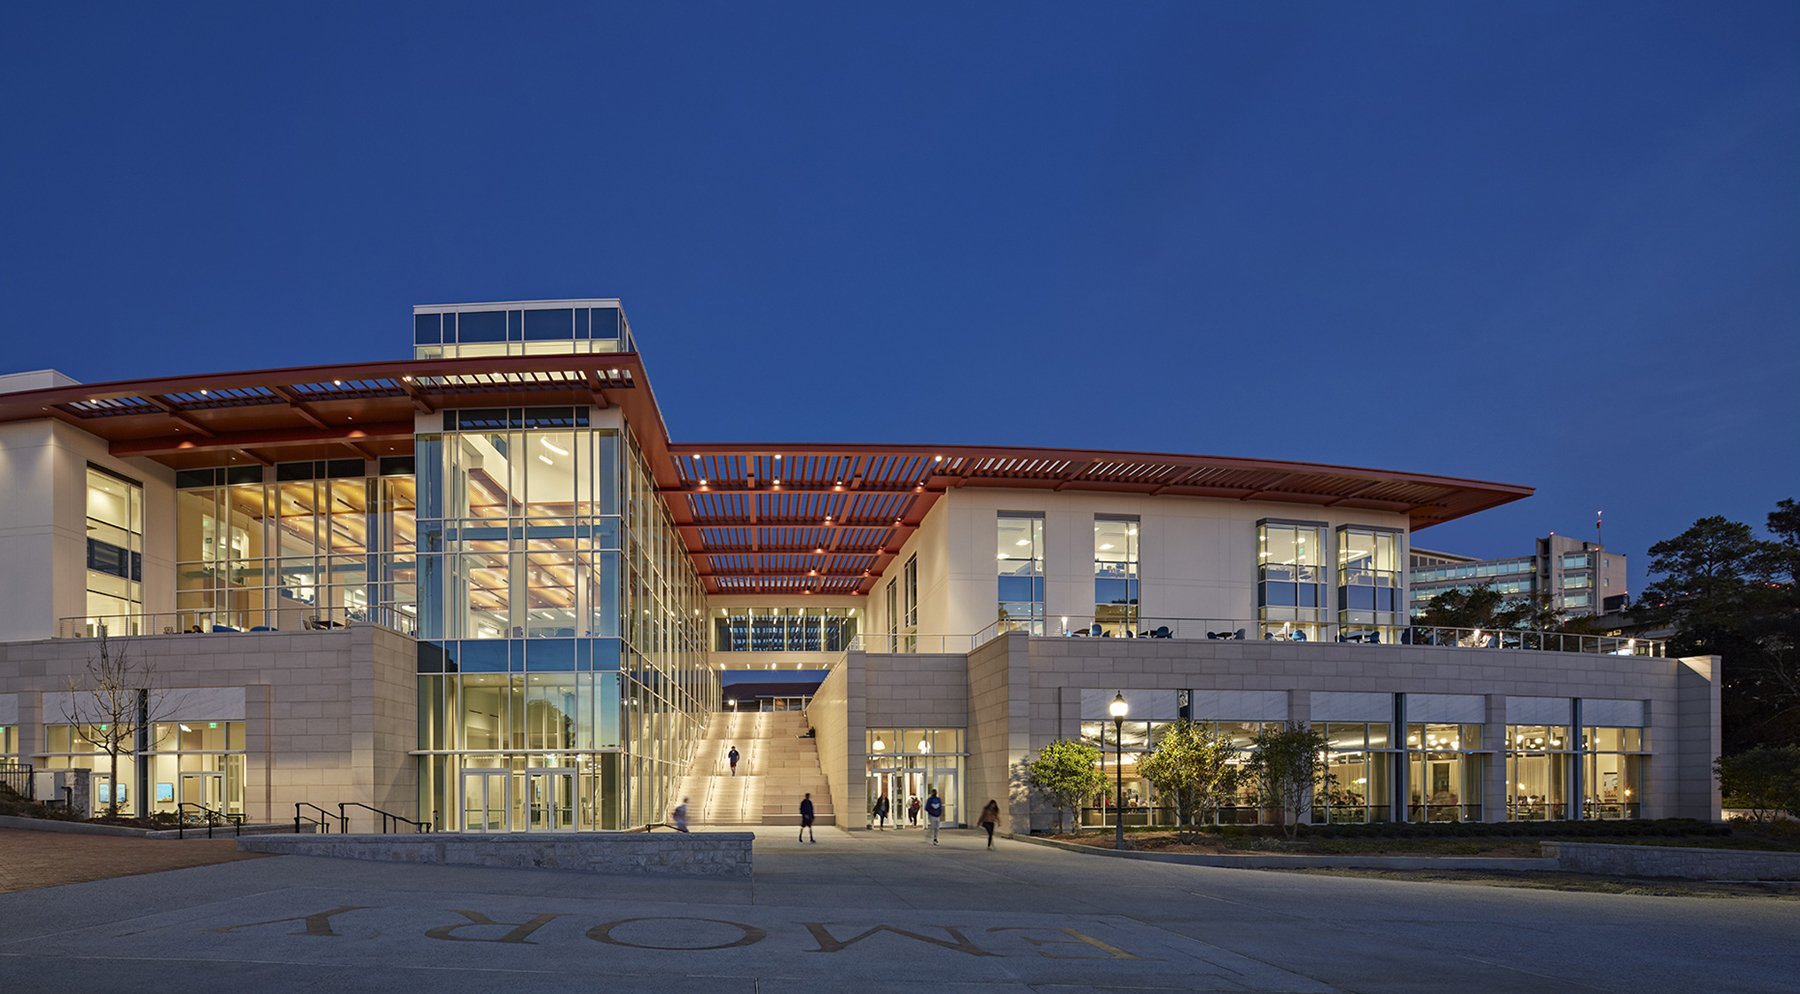 Emory University / Campus Life Center